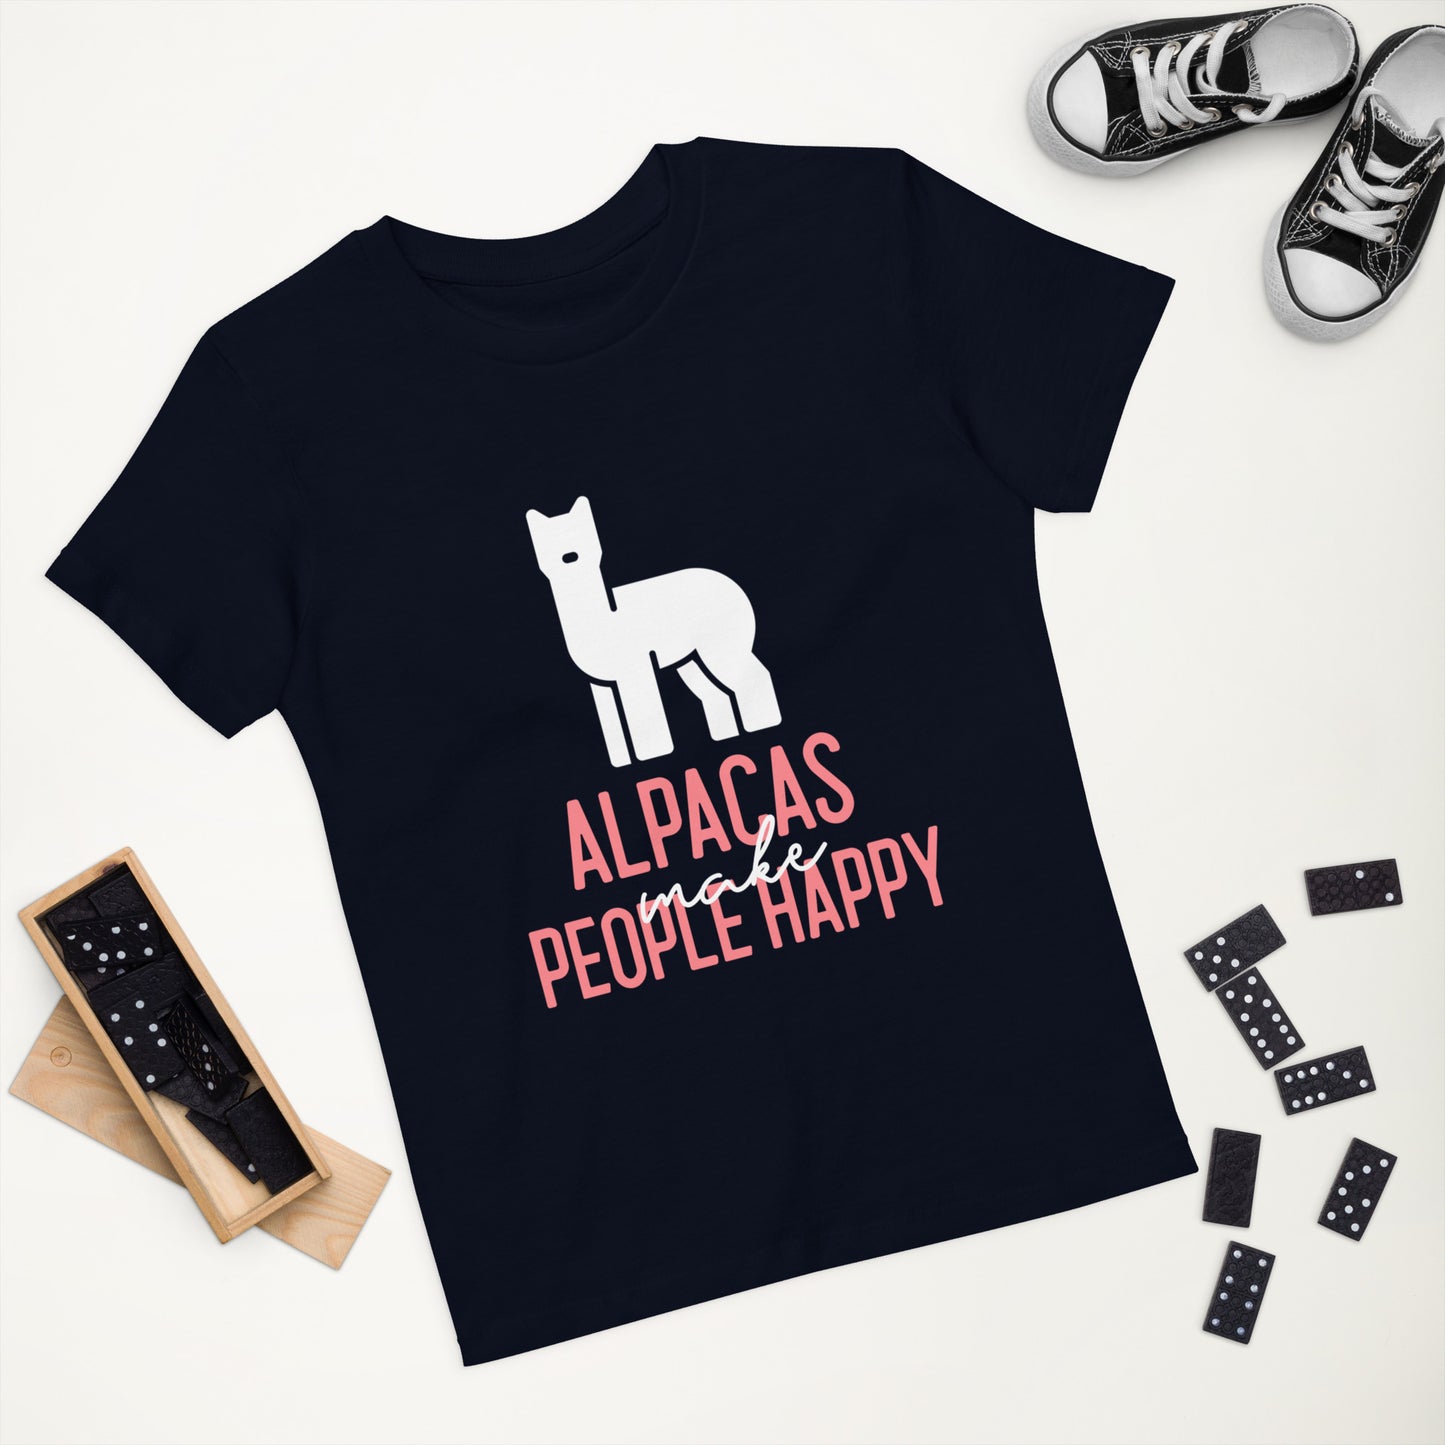 Alpacas Make People Happy Organic cotton kids t-shirt